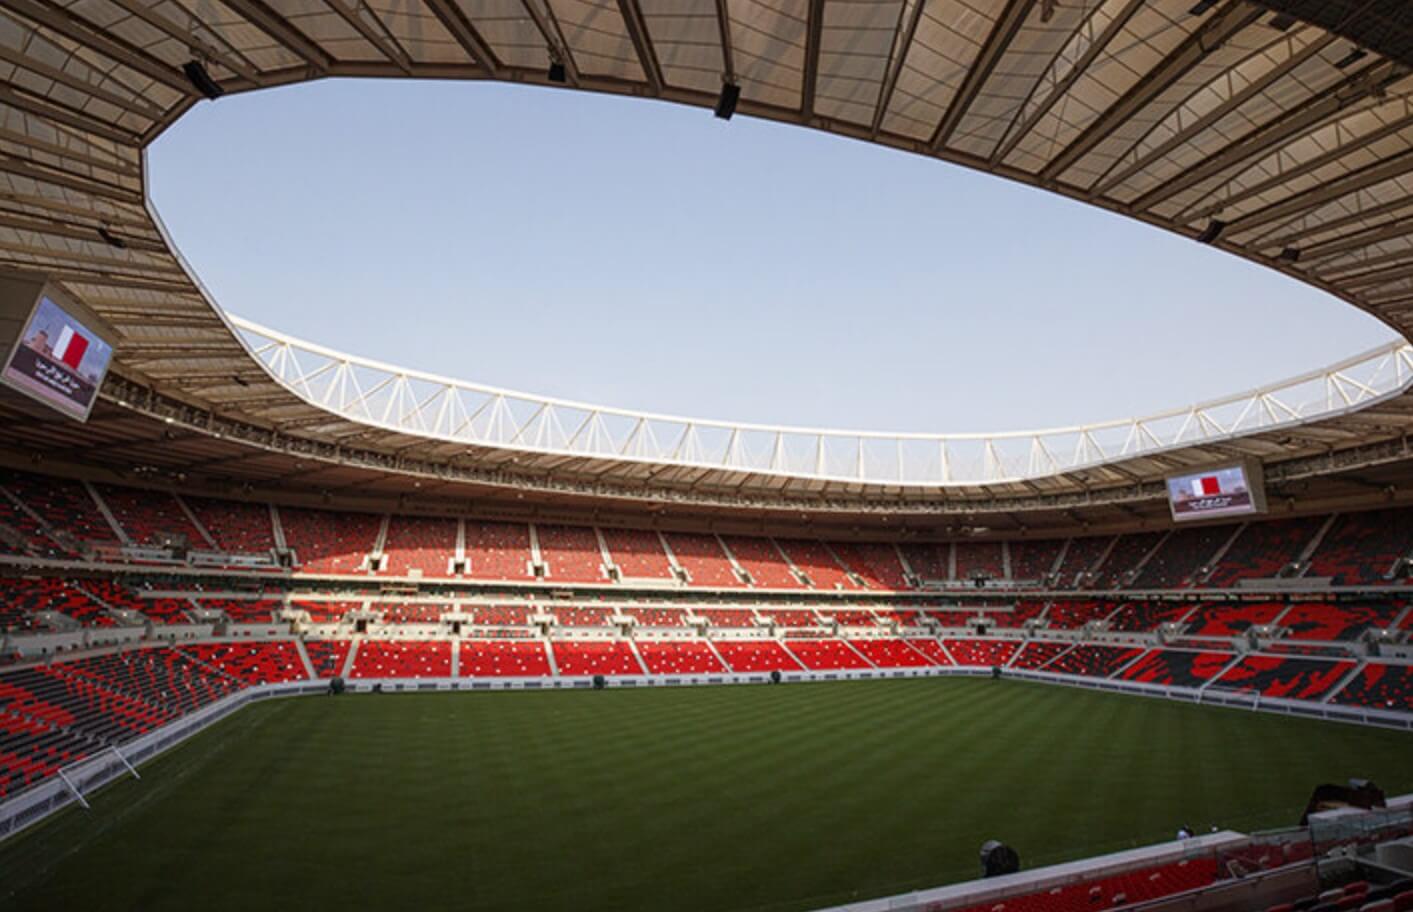 stadion Ahmed Bin Ali iznutri chempionat mira 2022 futbol